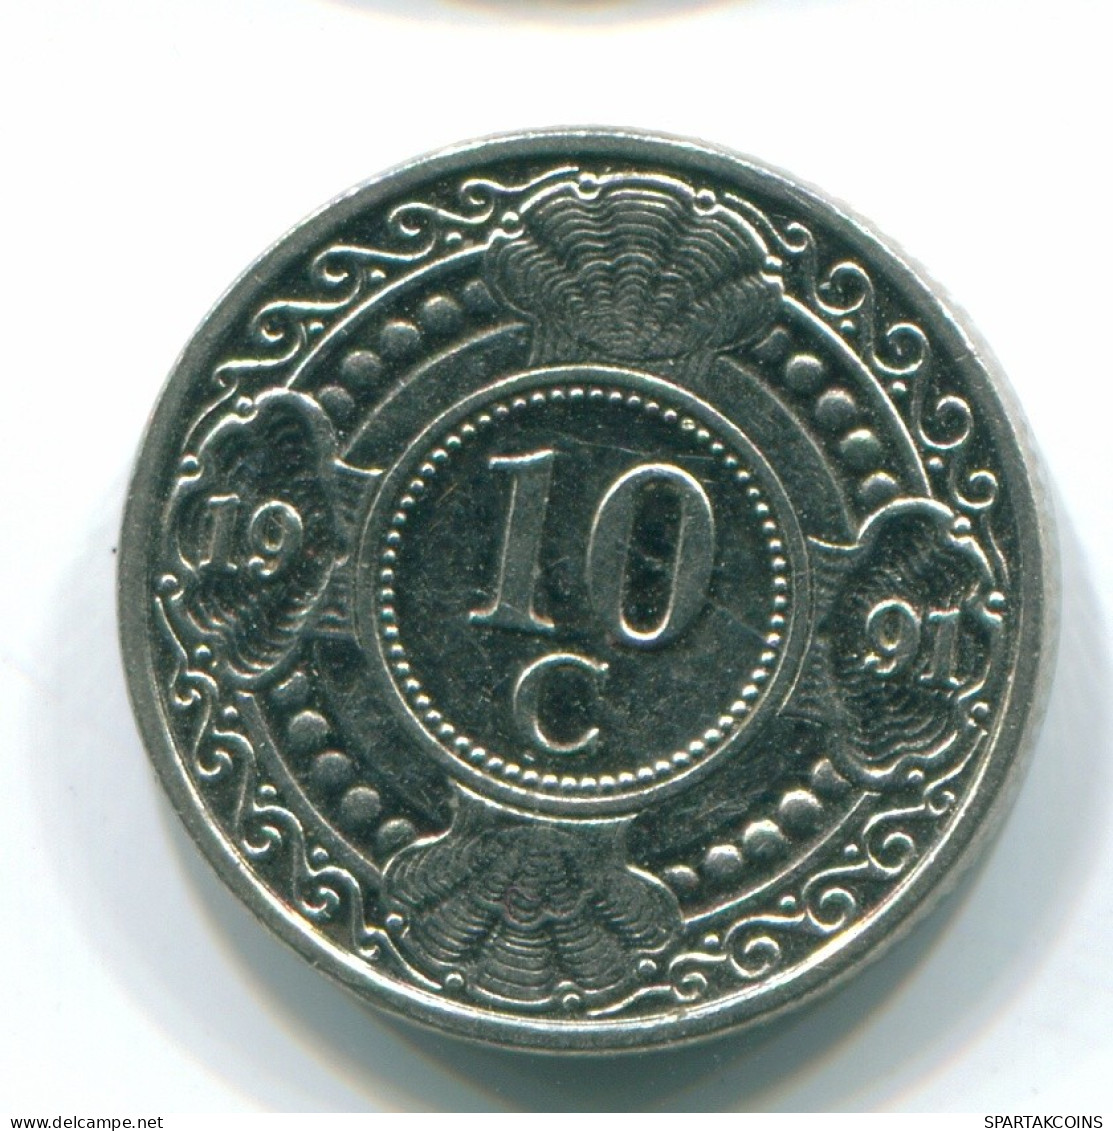 10 CENTS 1991 NETHERLANDS ANTILLES Nickel Colonial Coin #S11336.U.A - Antilles Néerlandaises